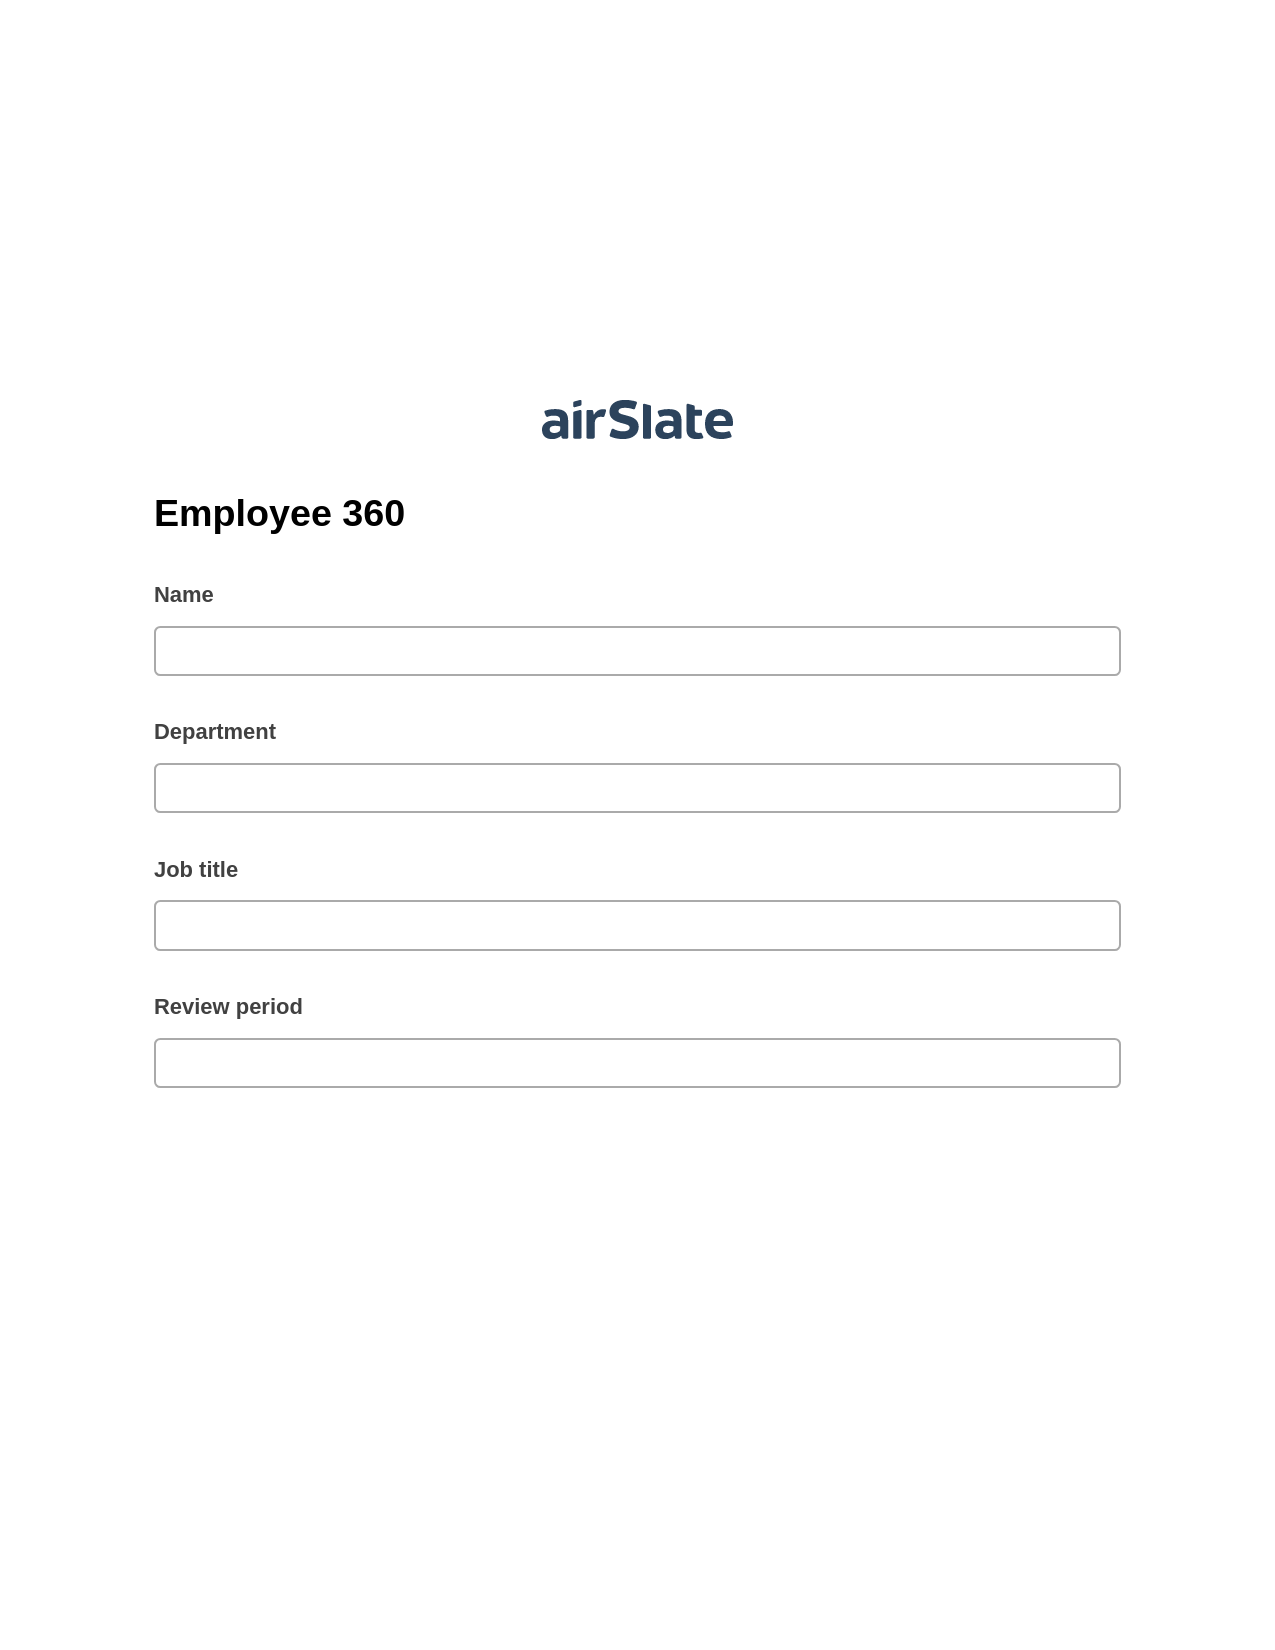 Employee 360 Pre-fill from CSV File Bot, Revoke Access Bot, Archive to SharePoint Folder Bot